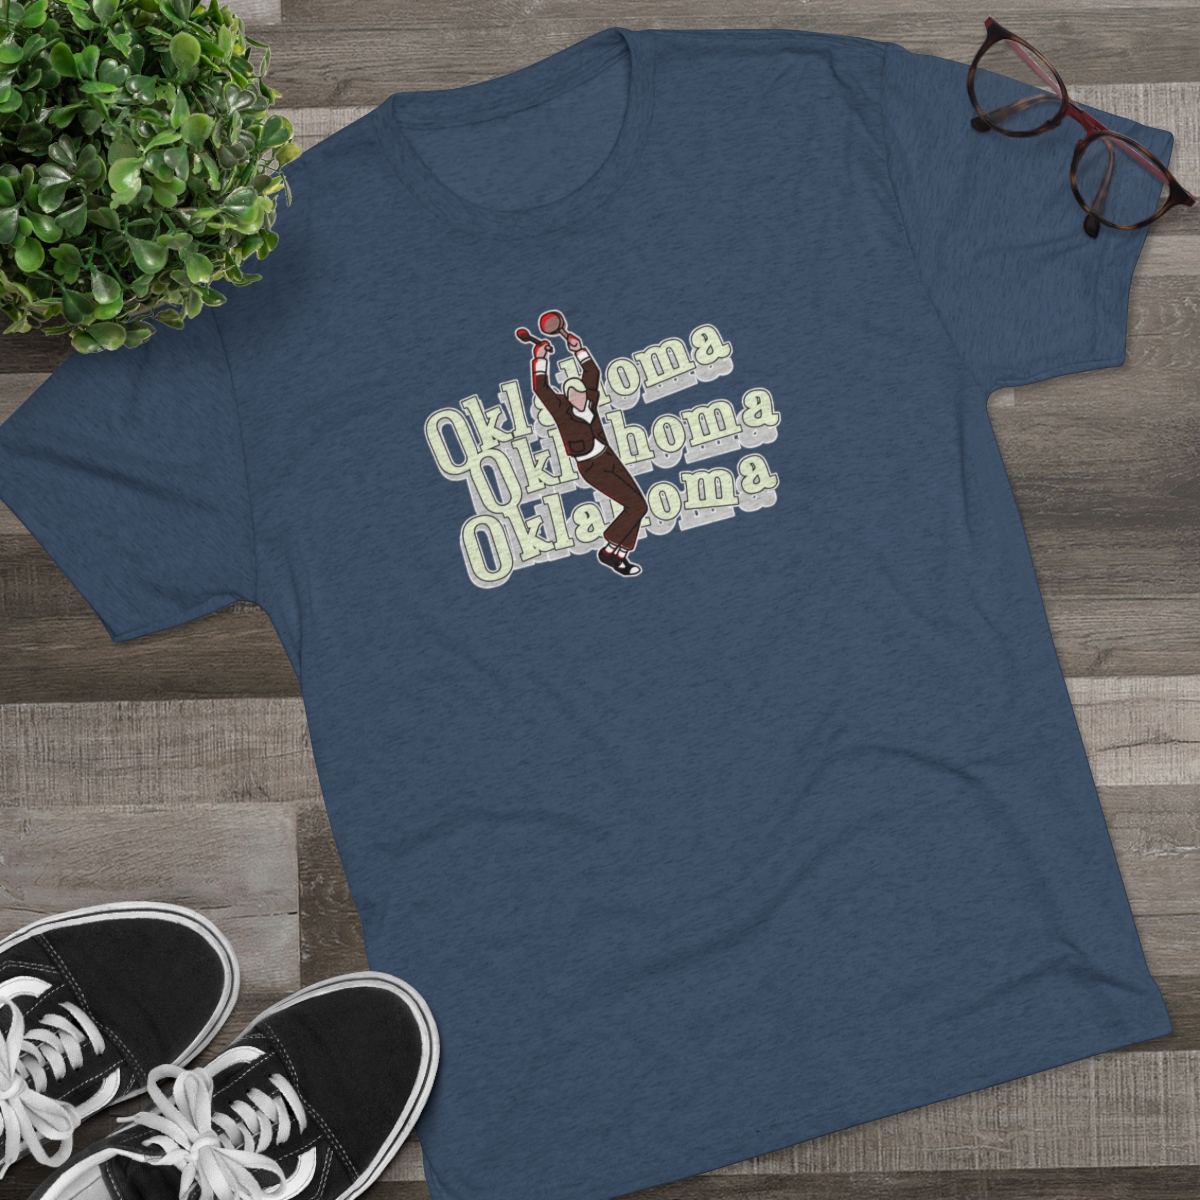 Oklahoma! (dark shirts) - Unisex Tri-Blend Crew Tee